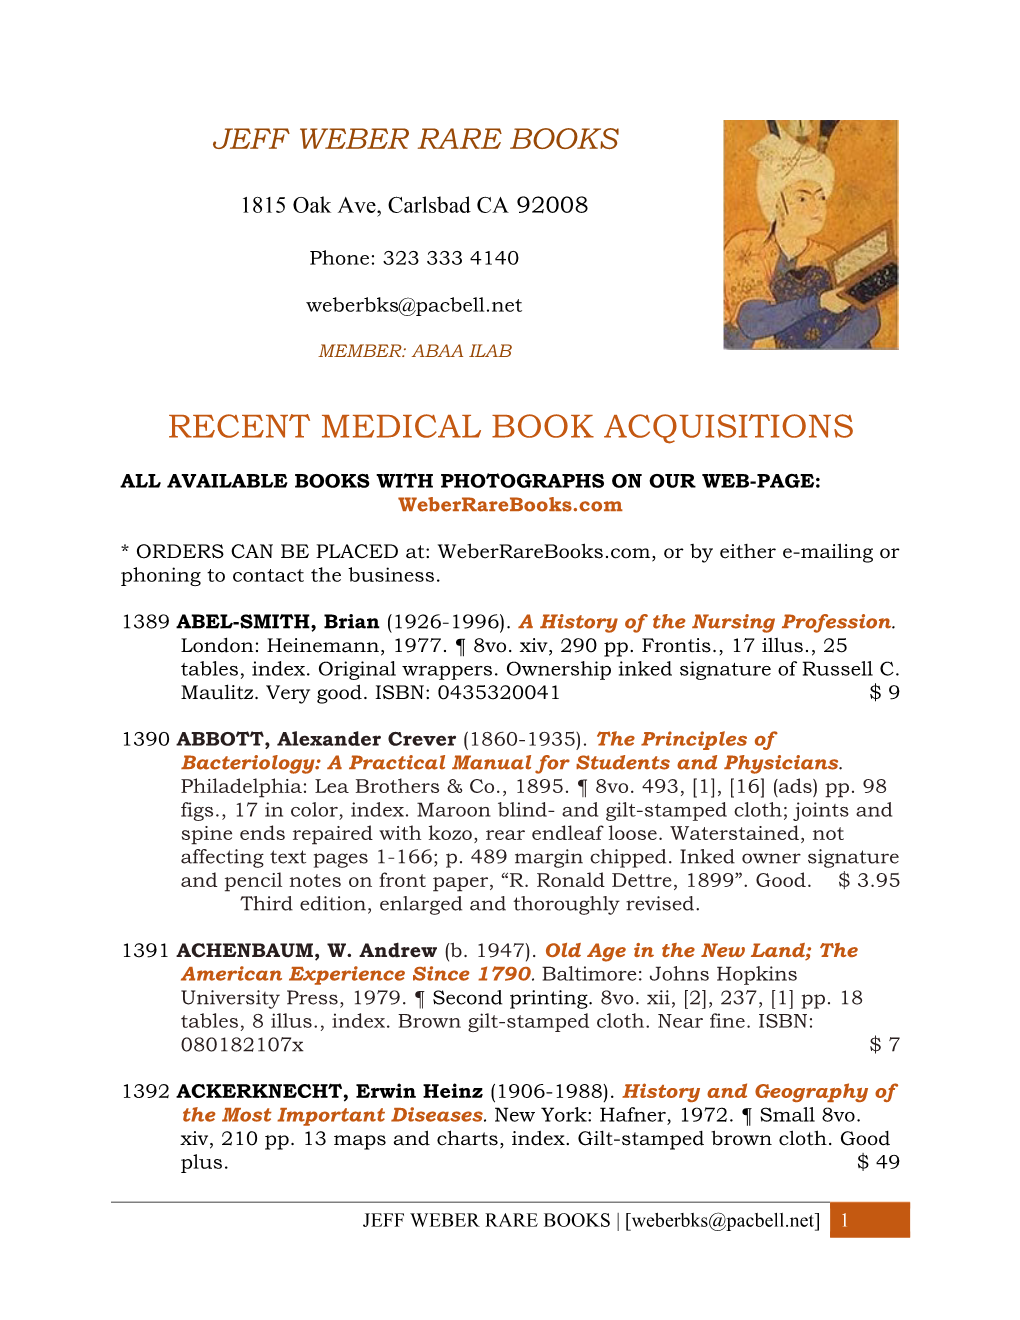 Recent Medical Book Acquisitions: Pathology